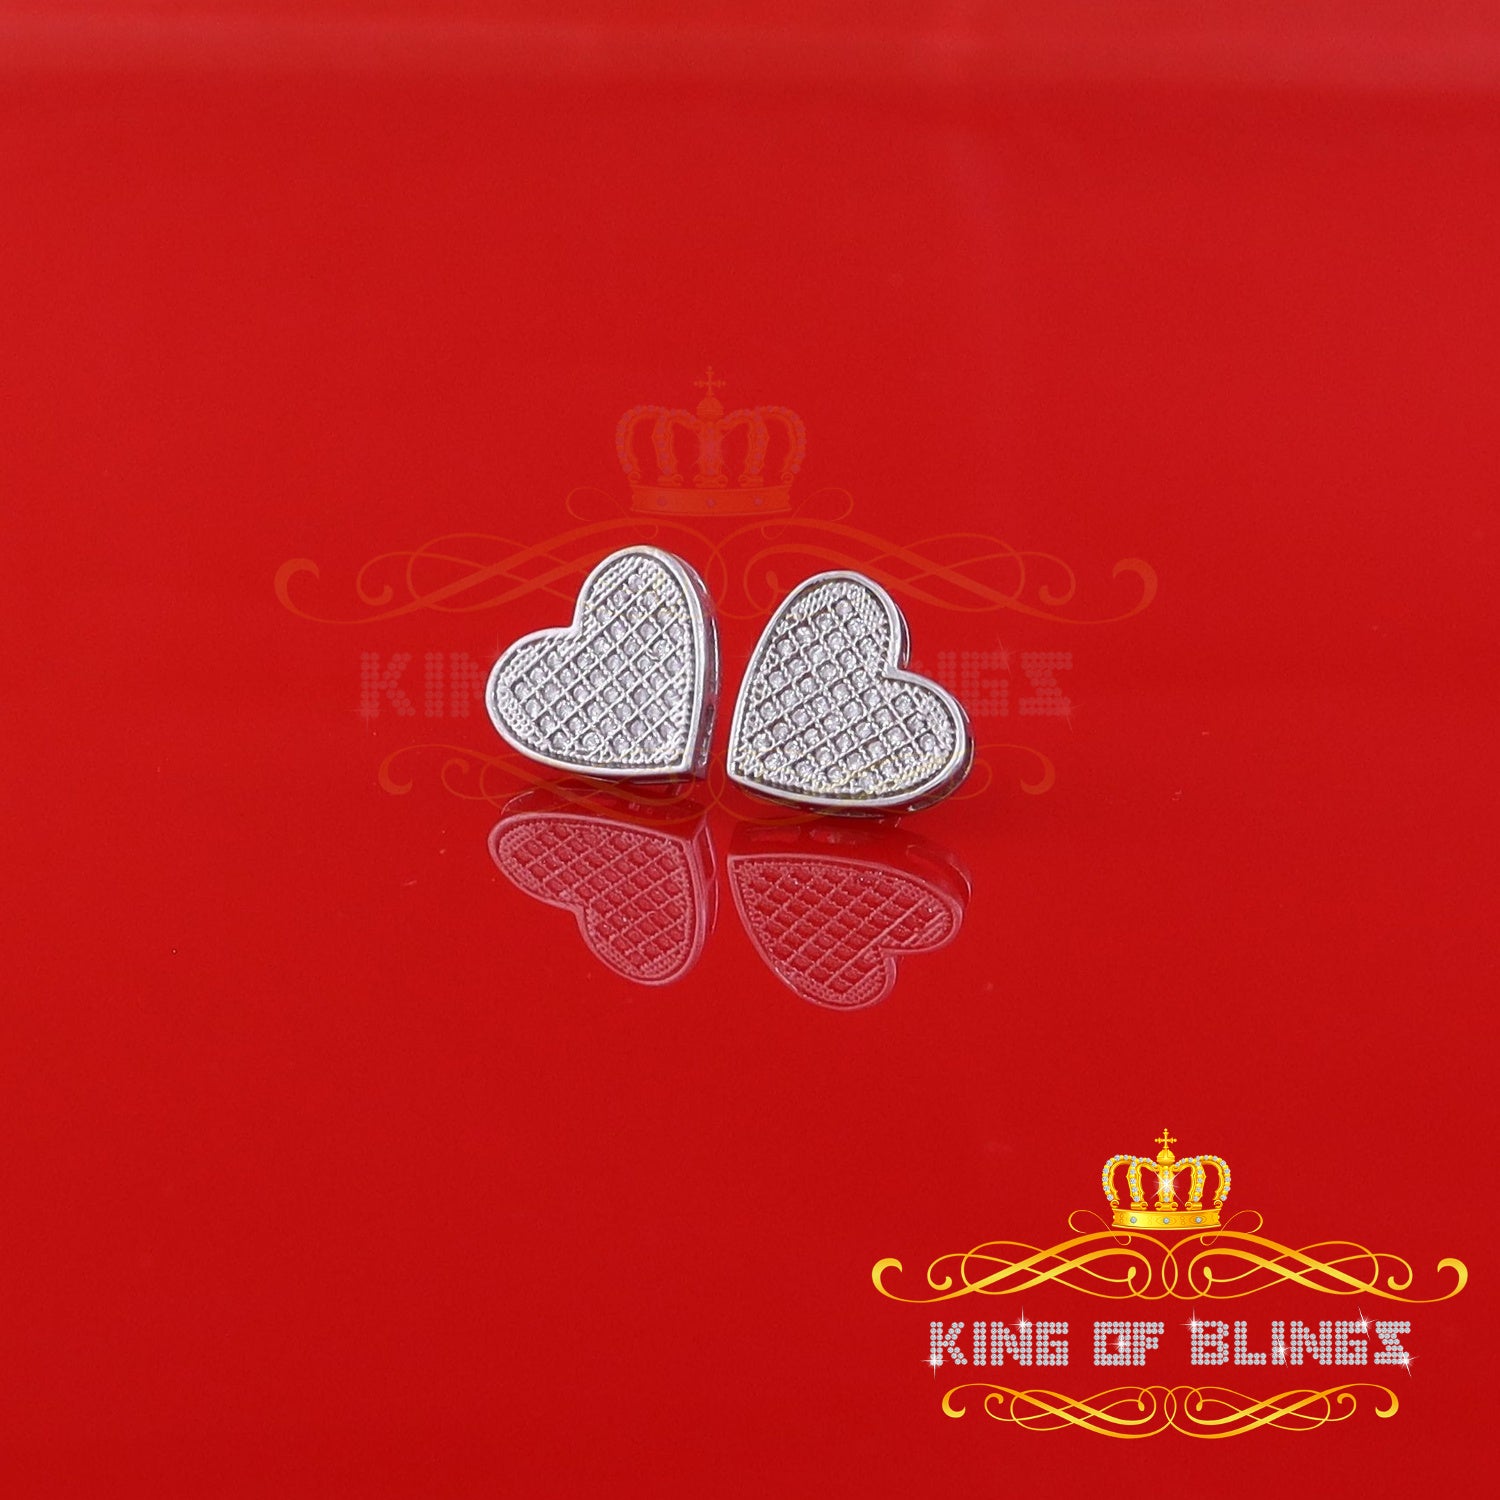 King of Blings- 925 Sterling White Silver 0.84ct Cubic Zirconia Women's & Men's Heart Earrings KING OF BLINGS